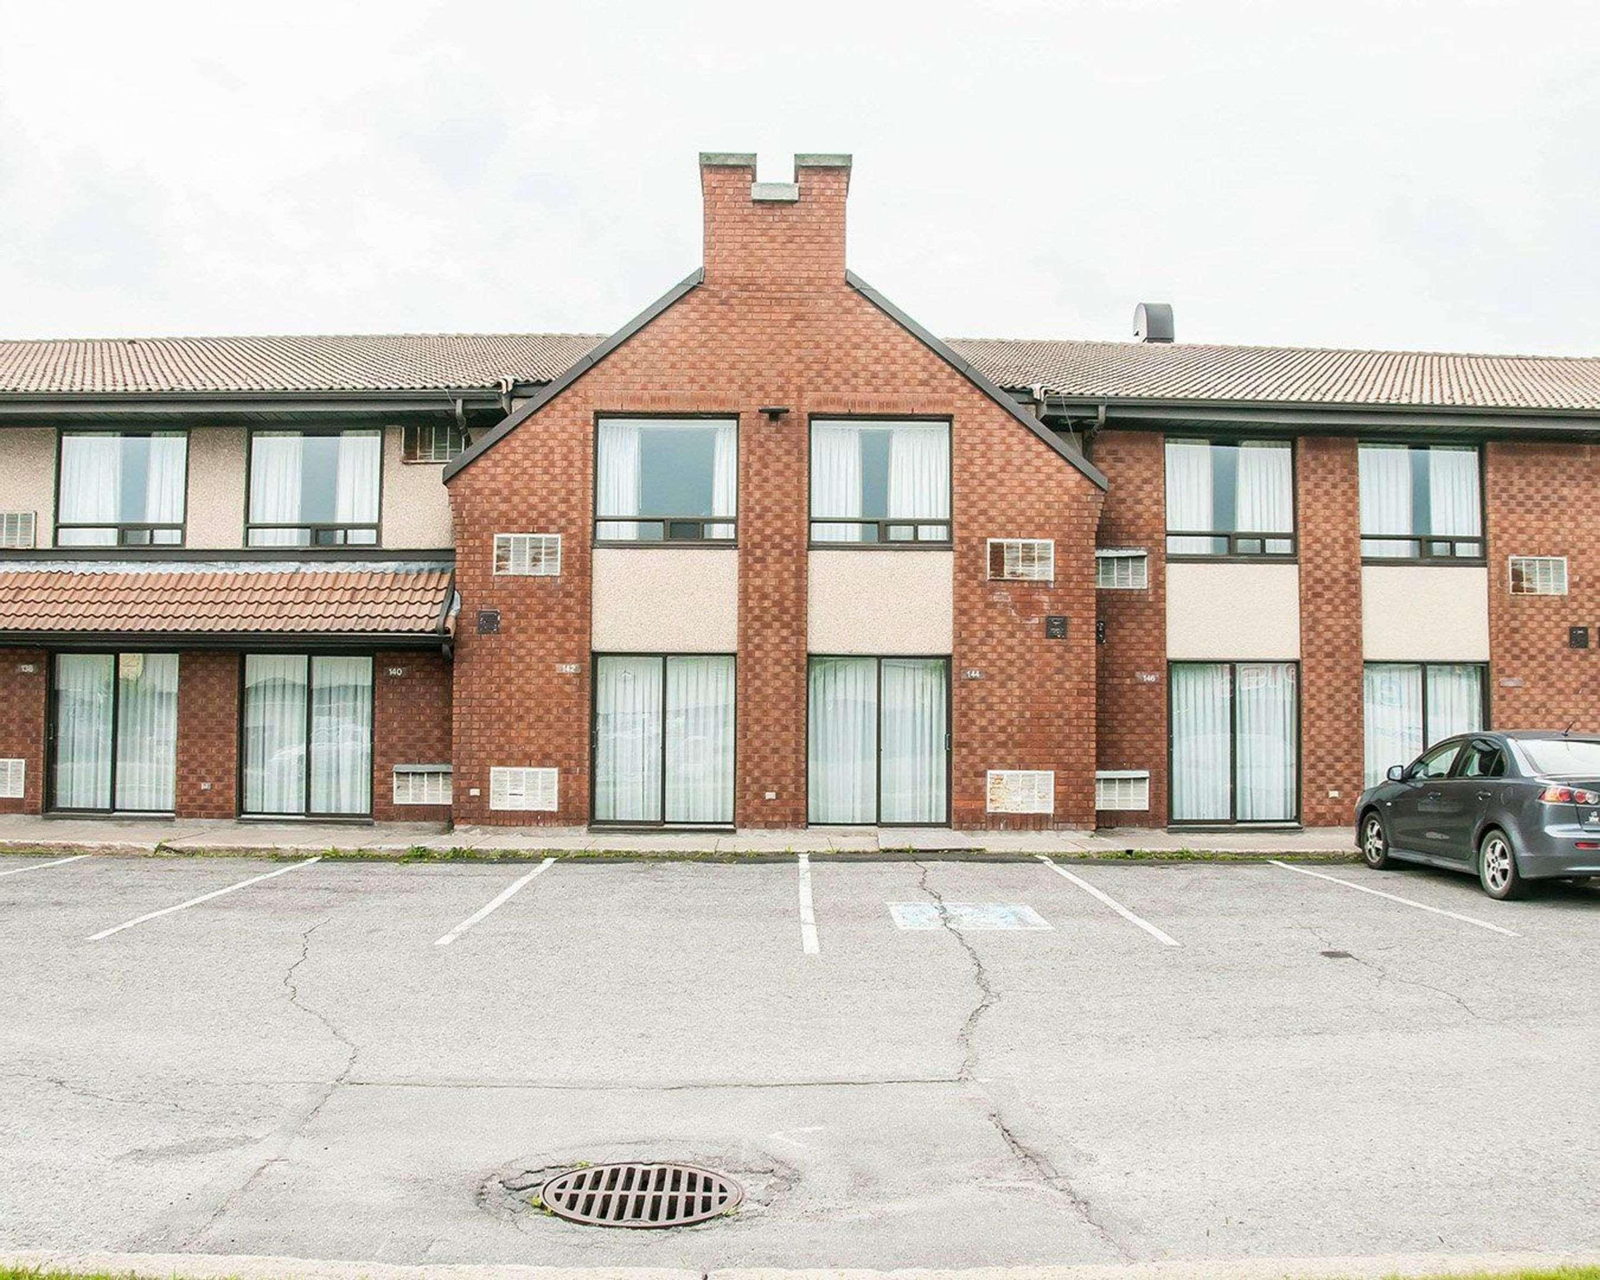 Exterior & Views 2, Comfort Inn Laval, Laval